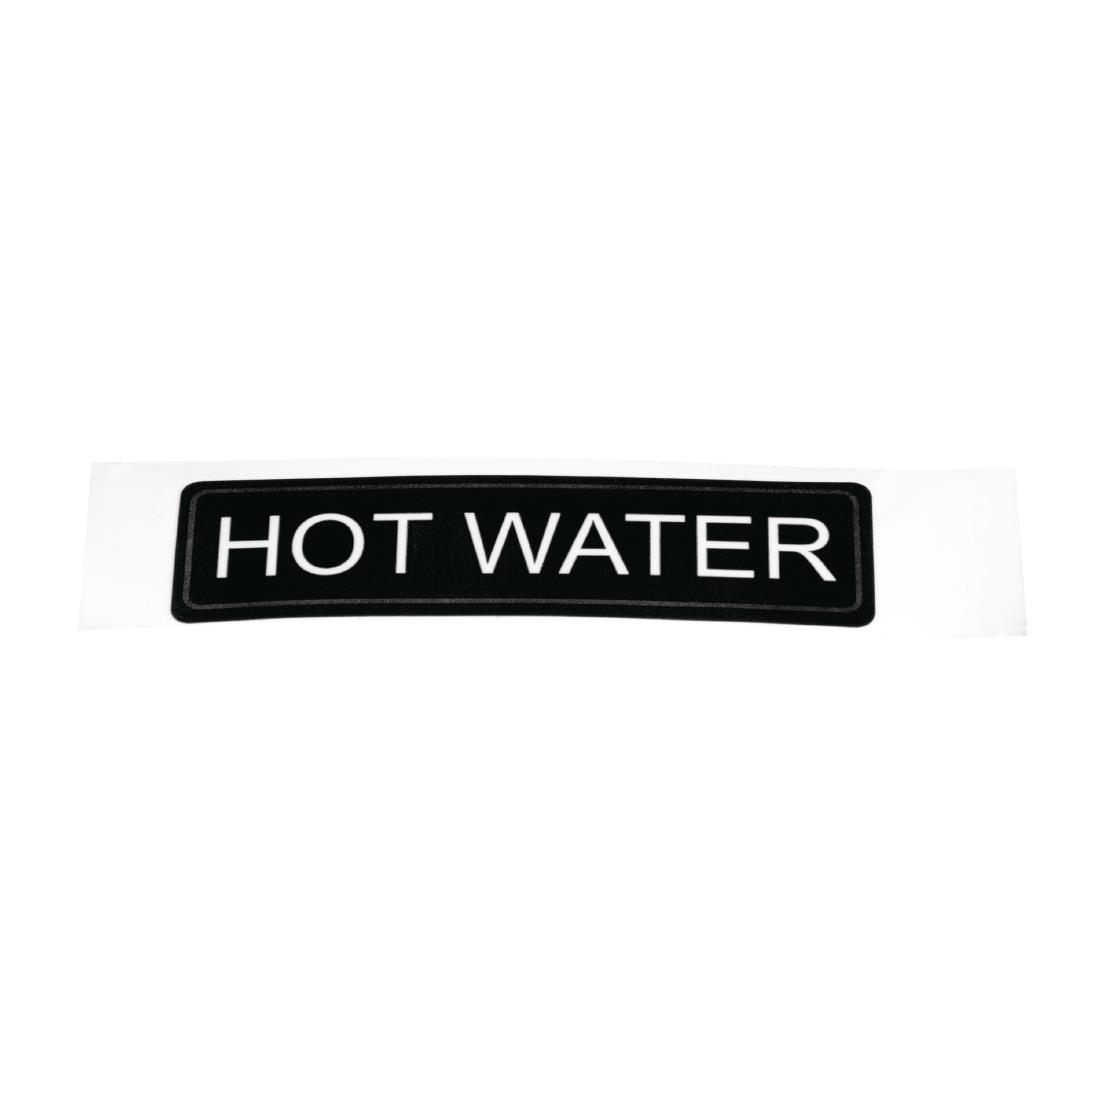 Adhesive Airpot Label - Hot Water - K705  - 2